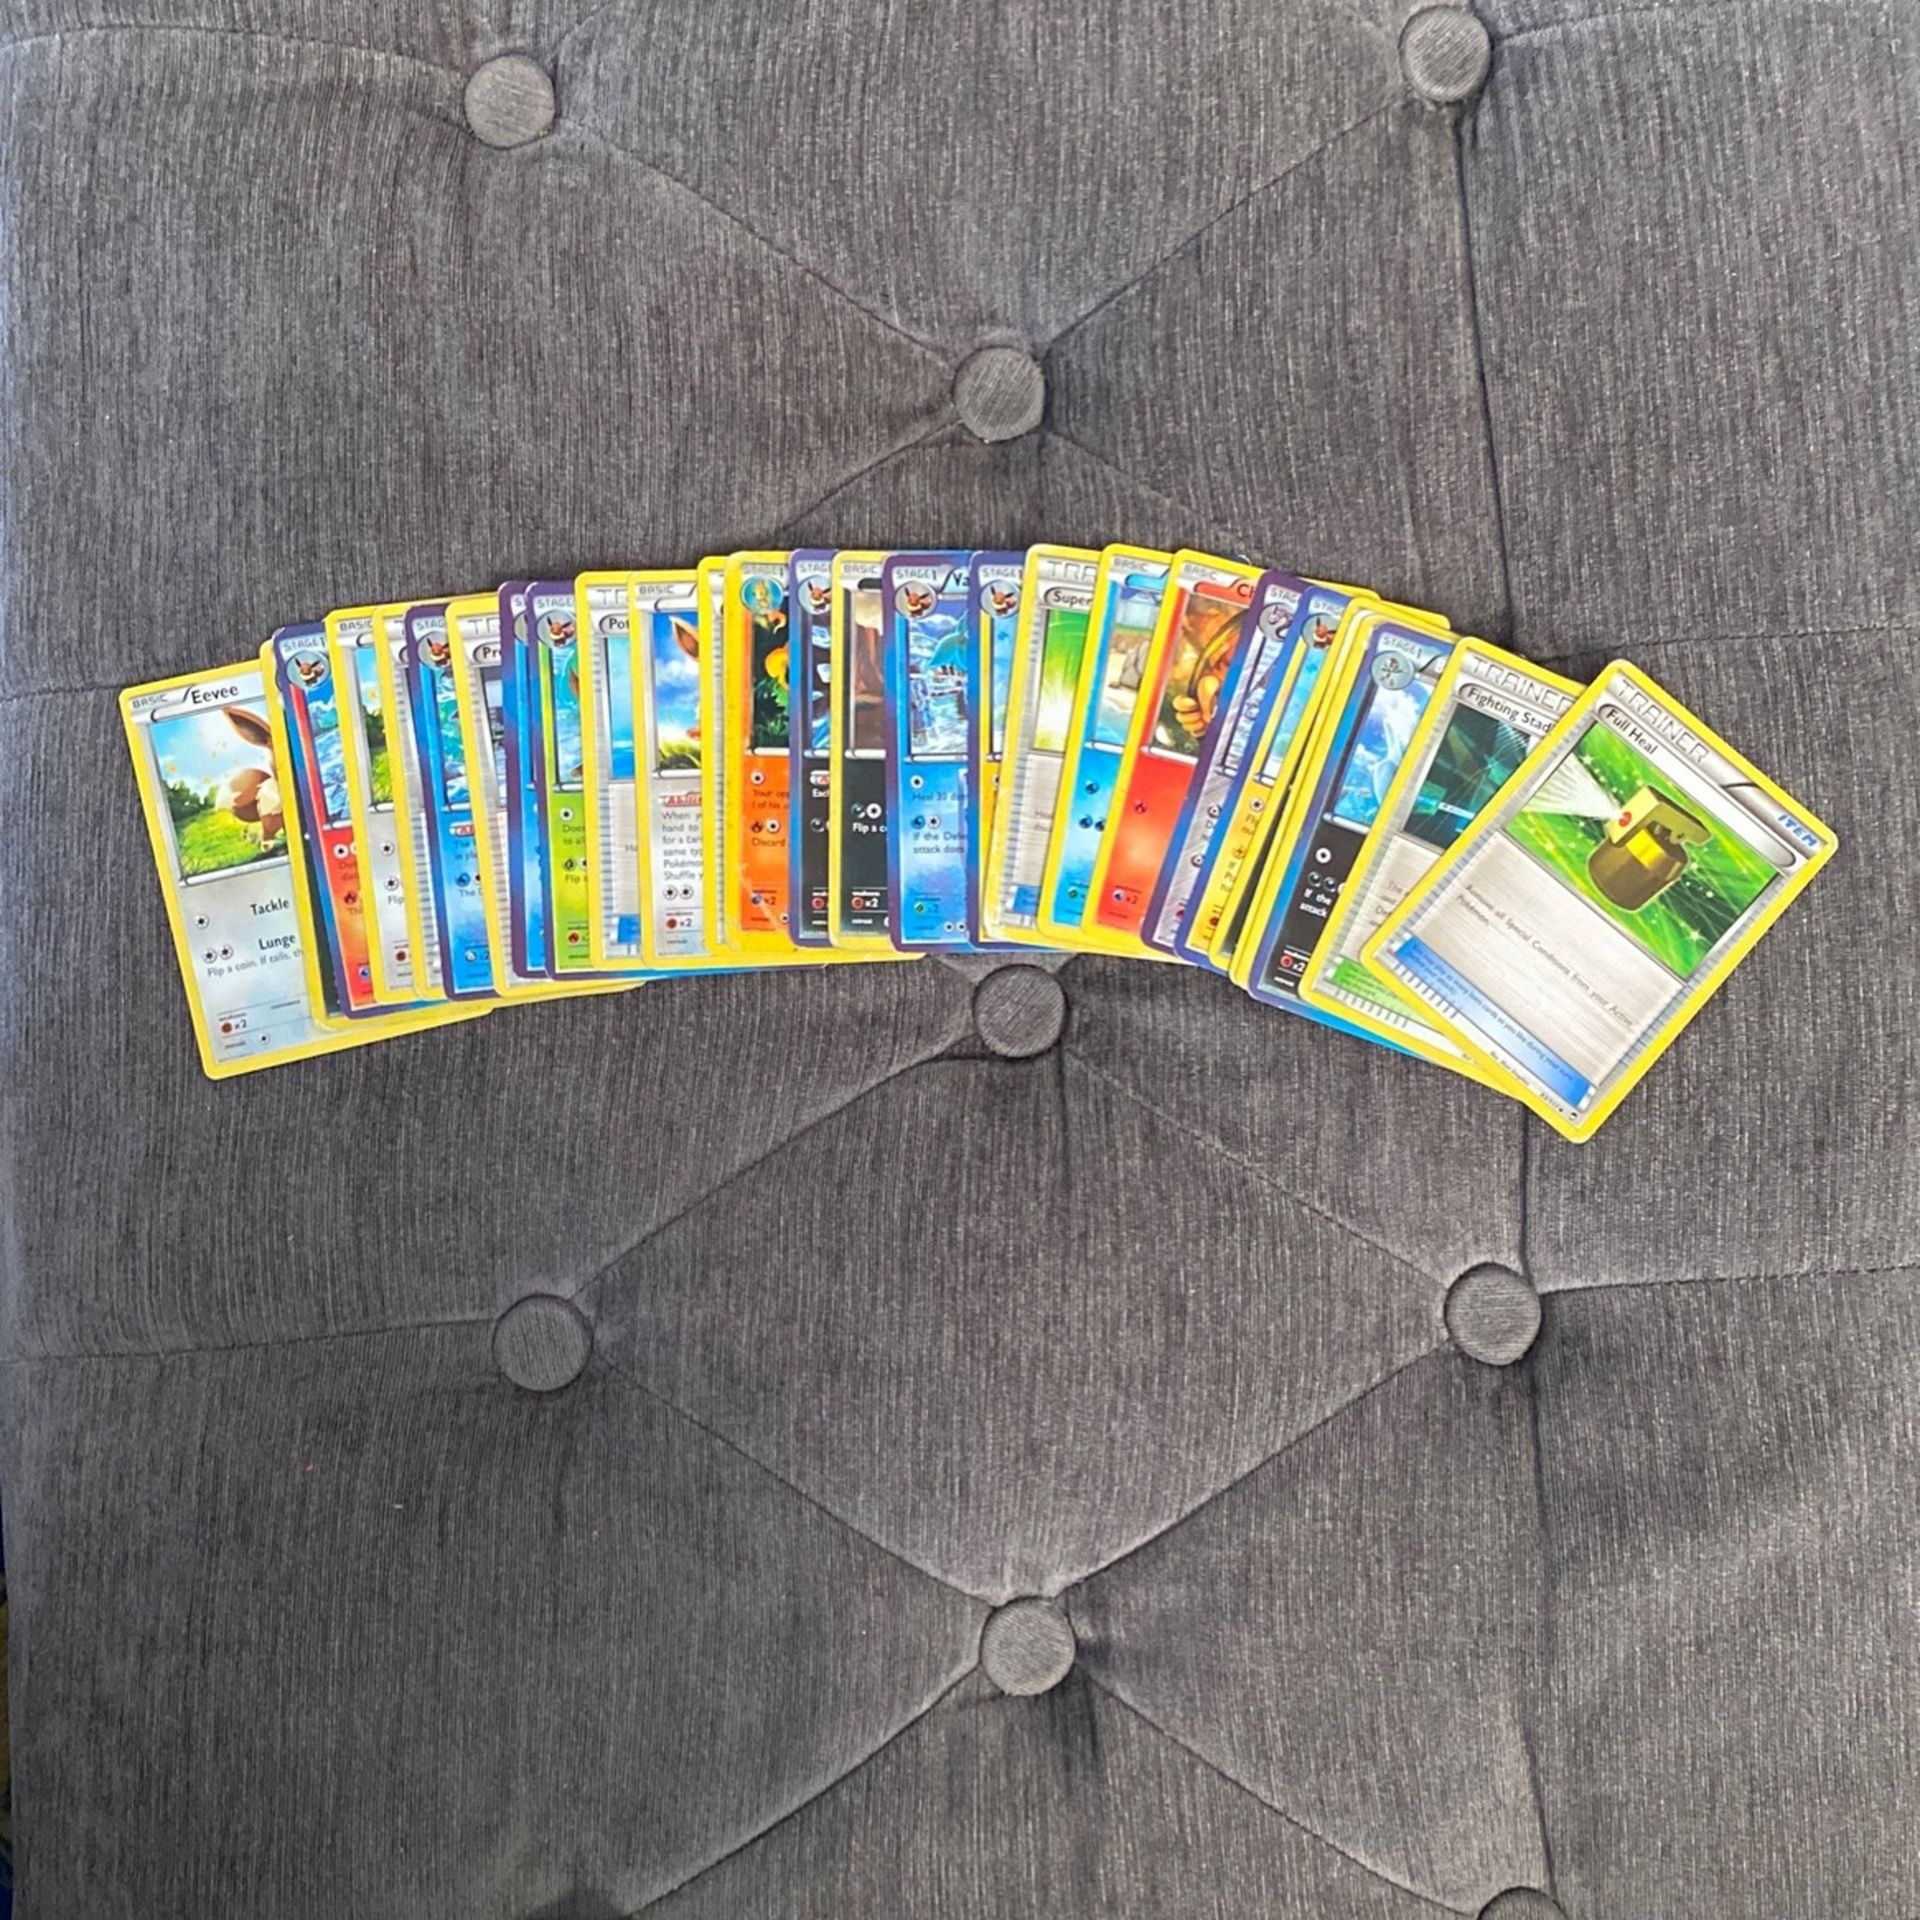 30 Pokemon Cards plus bonus card